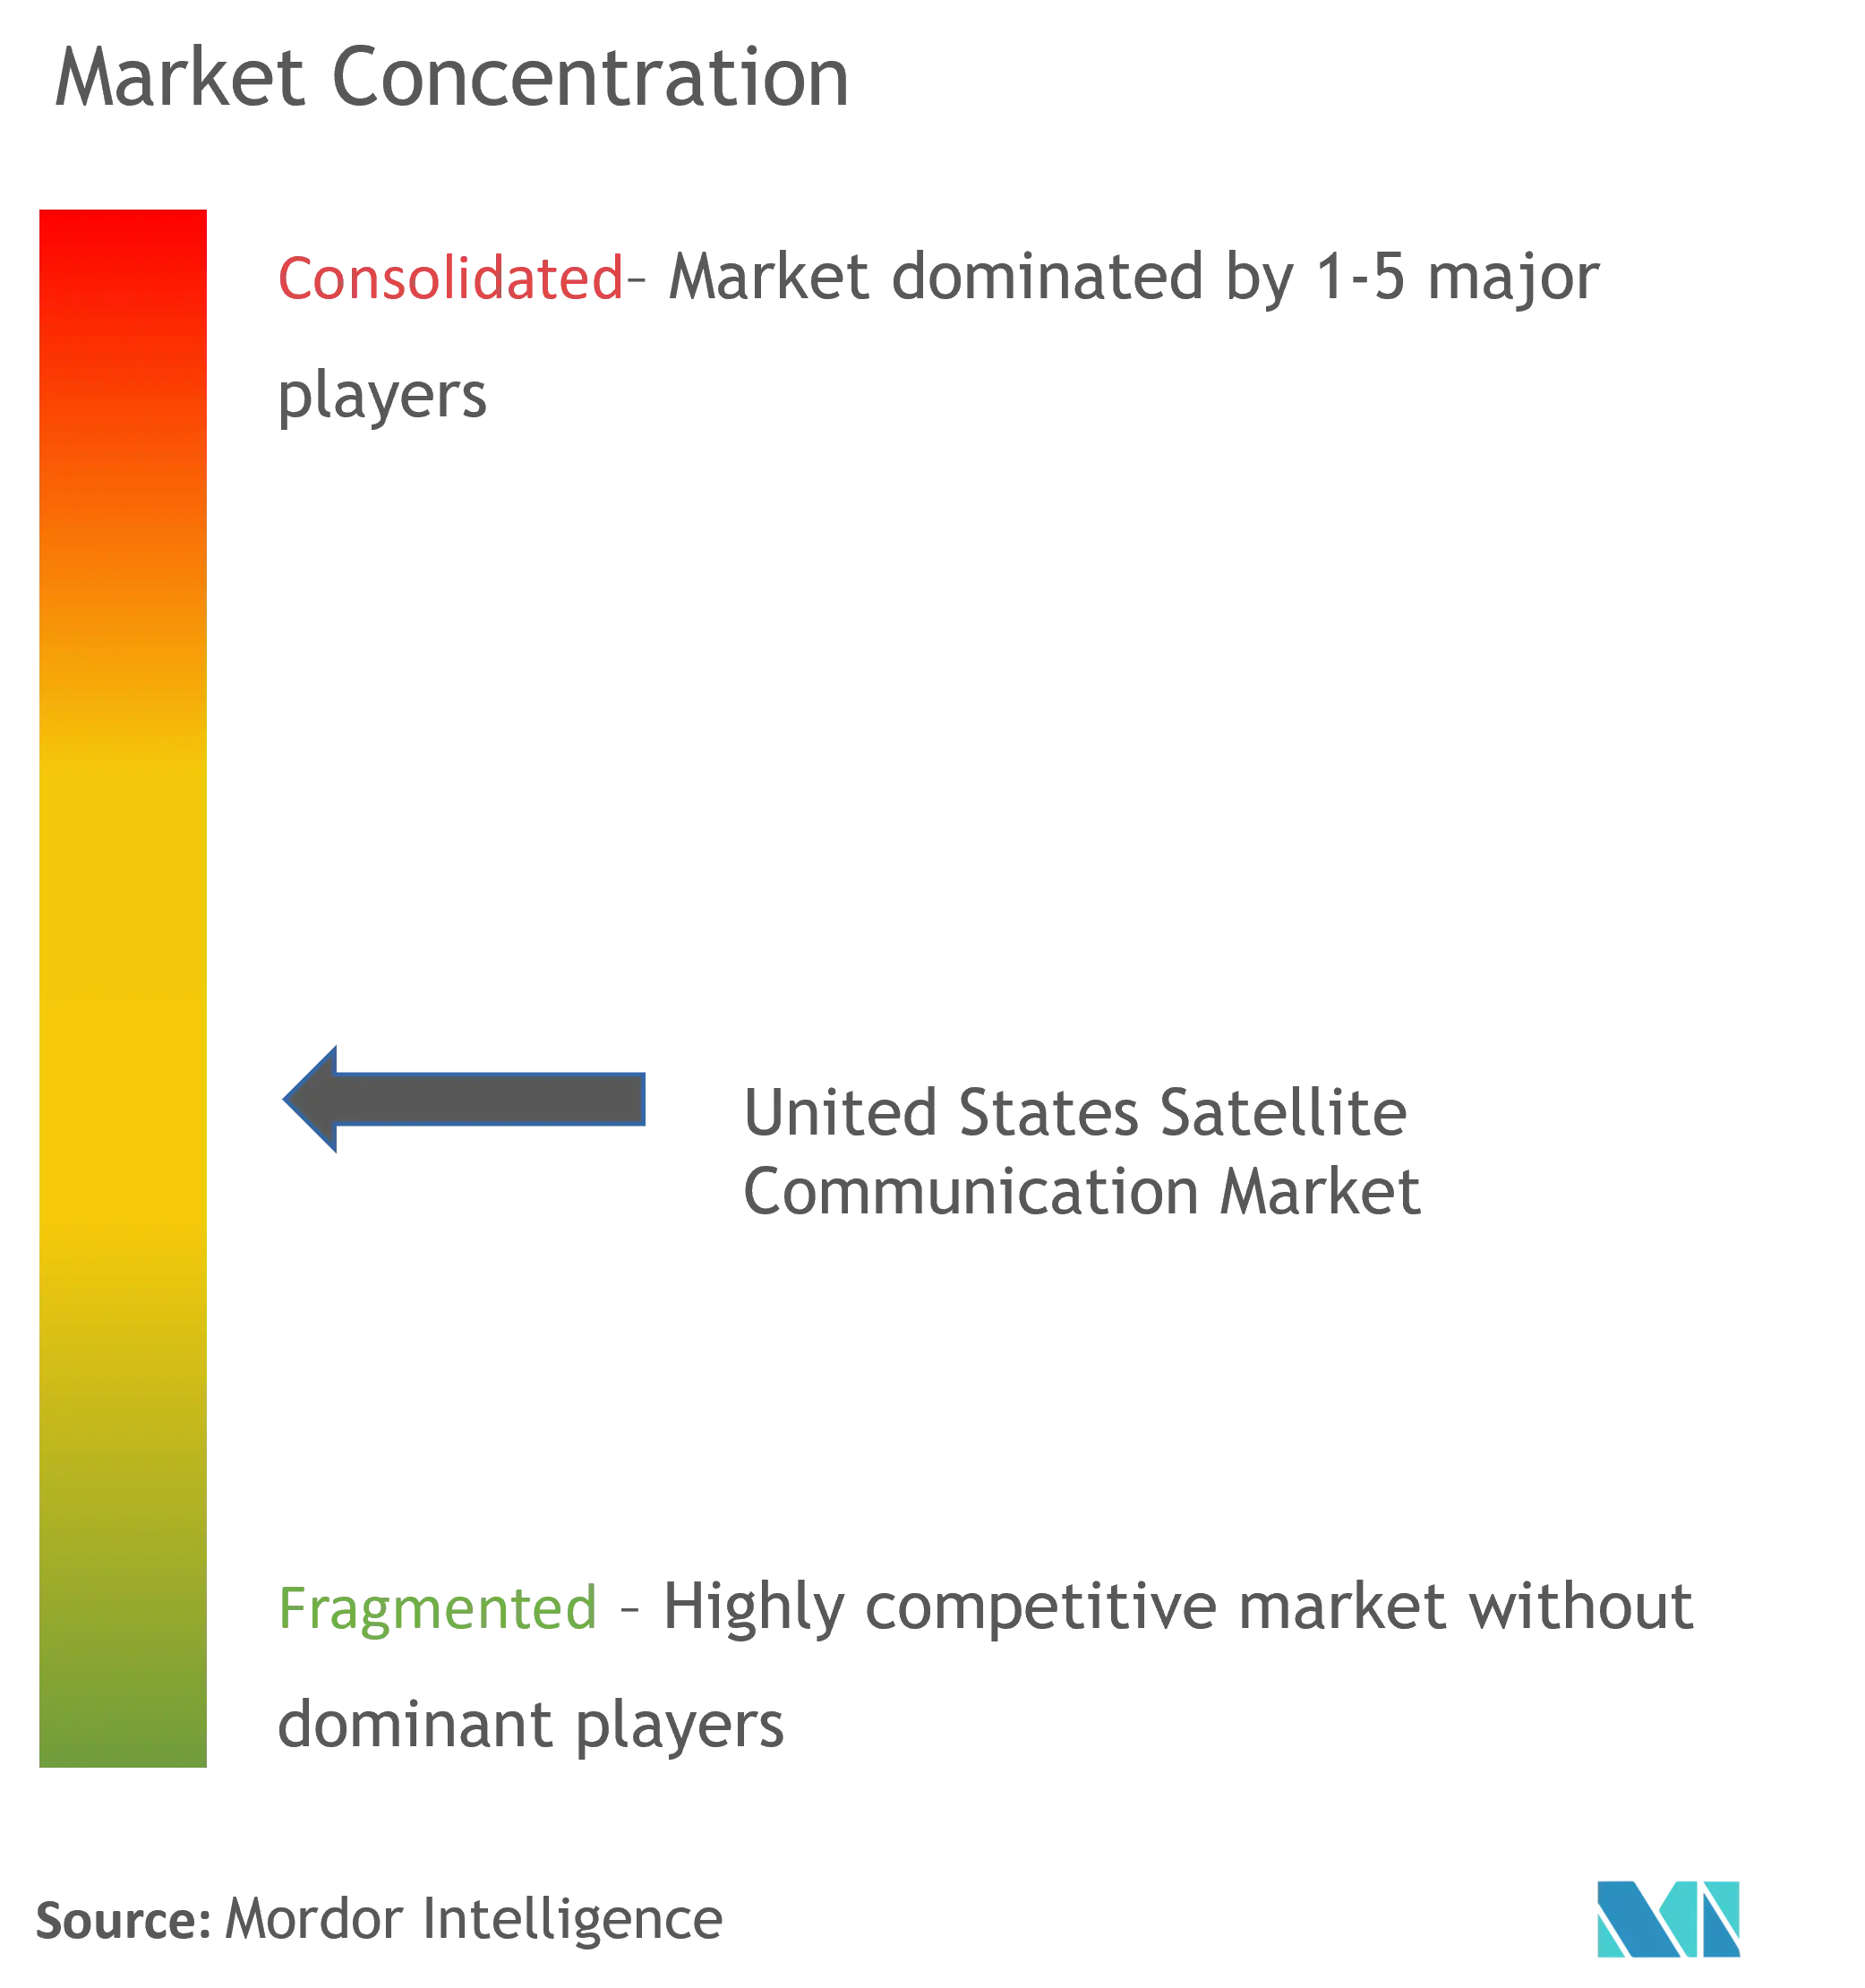 United States Satellite Communications Market  Concentration